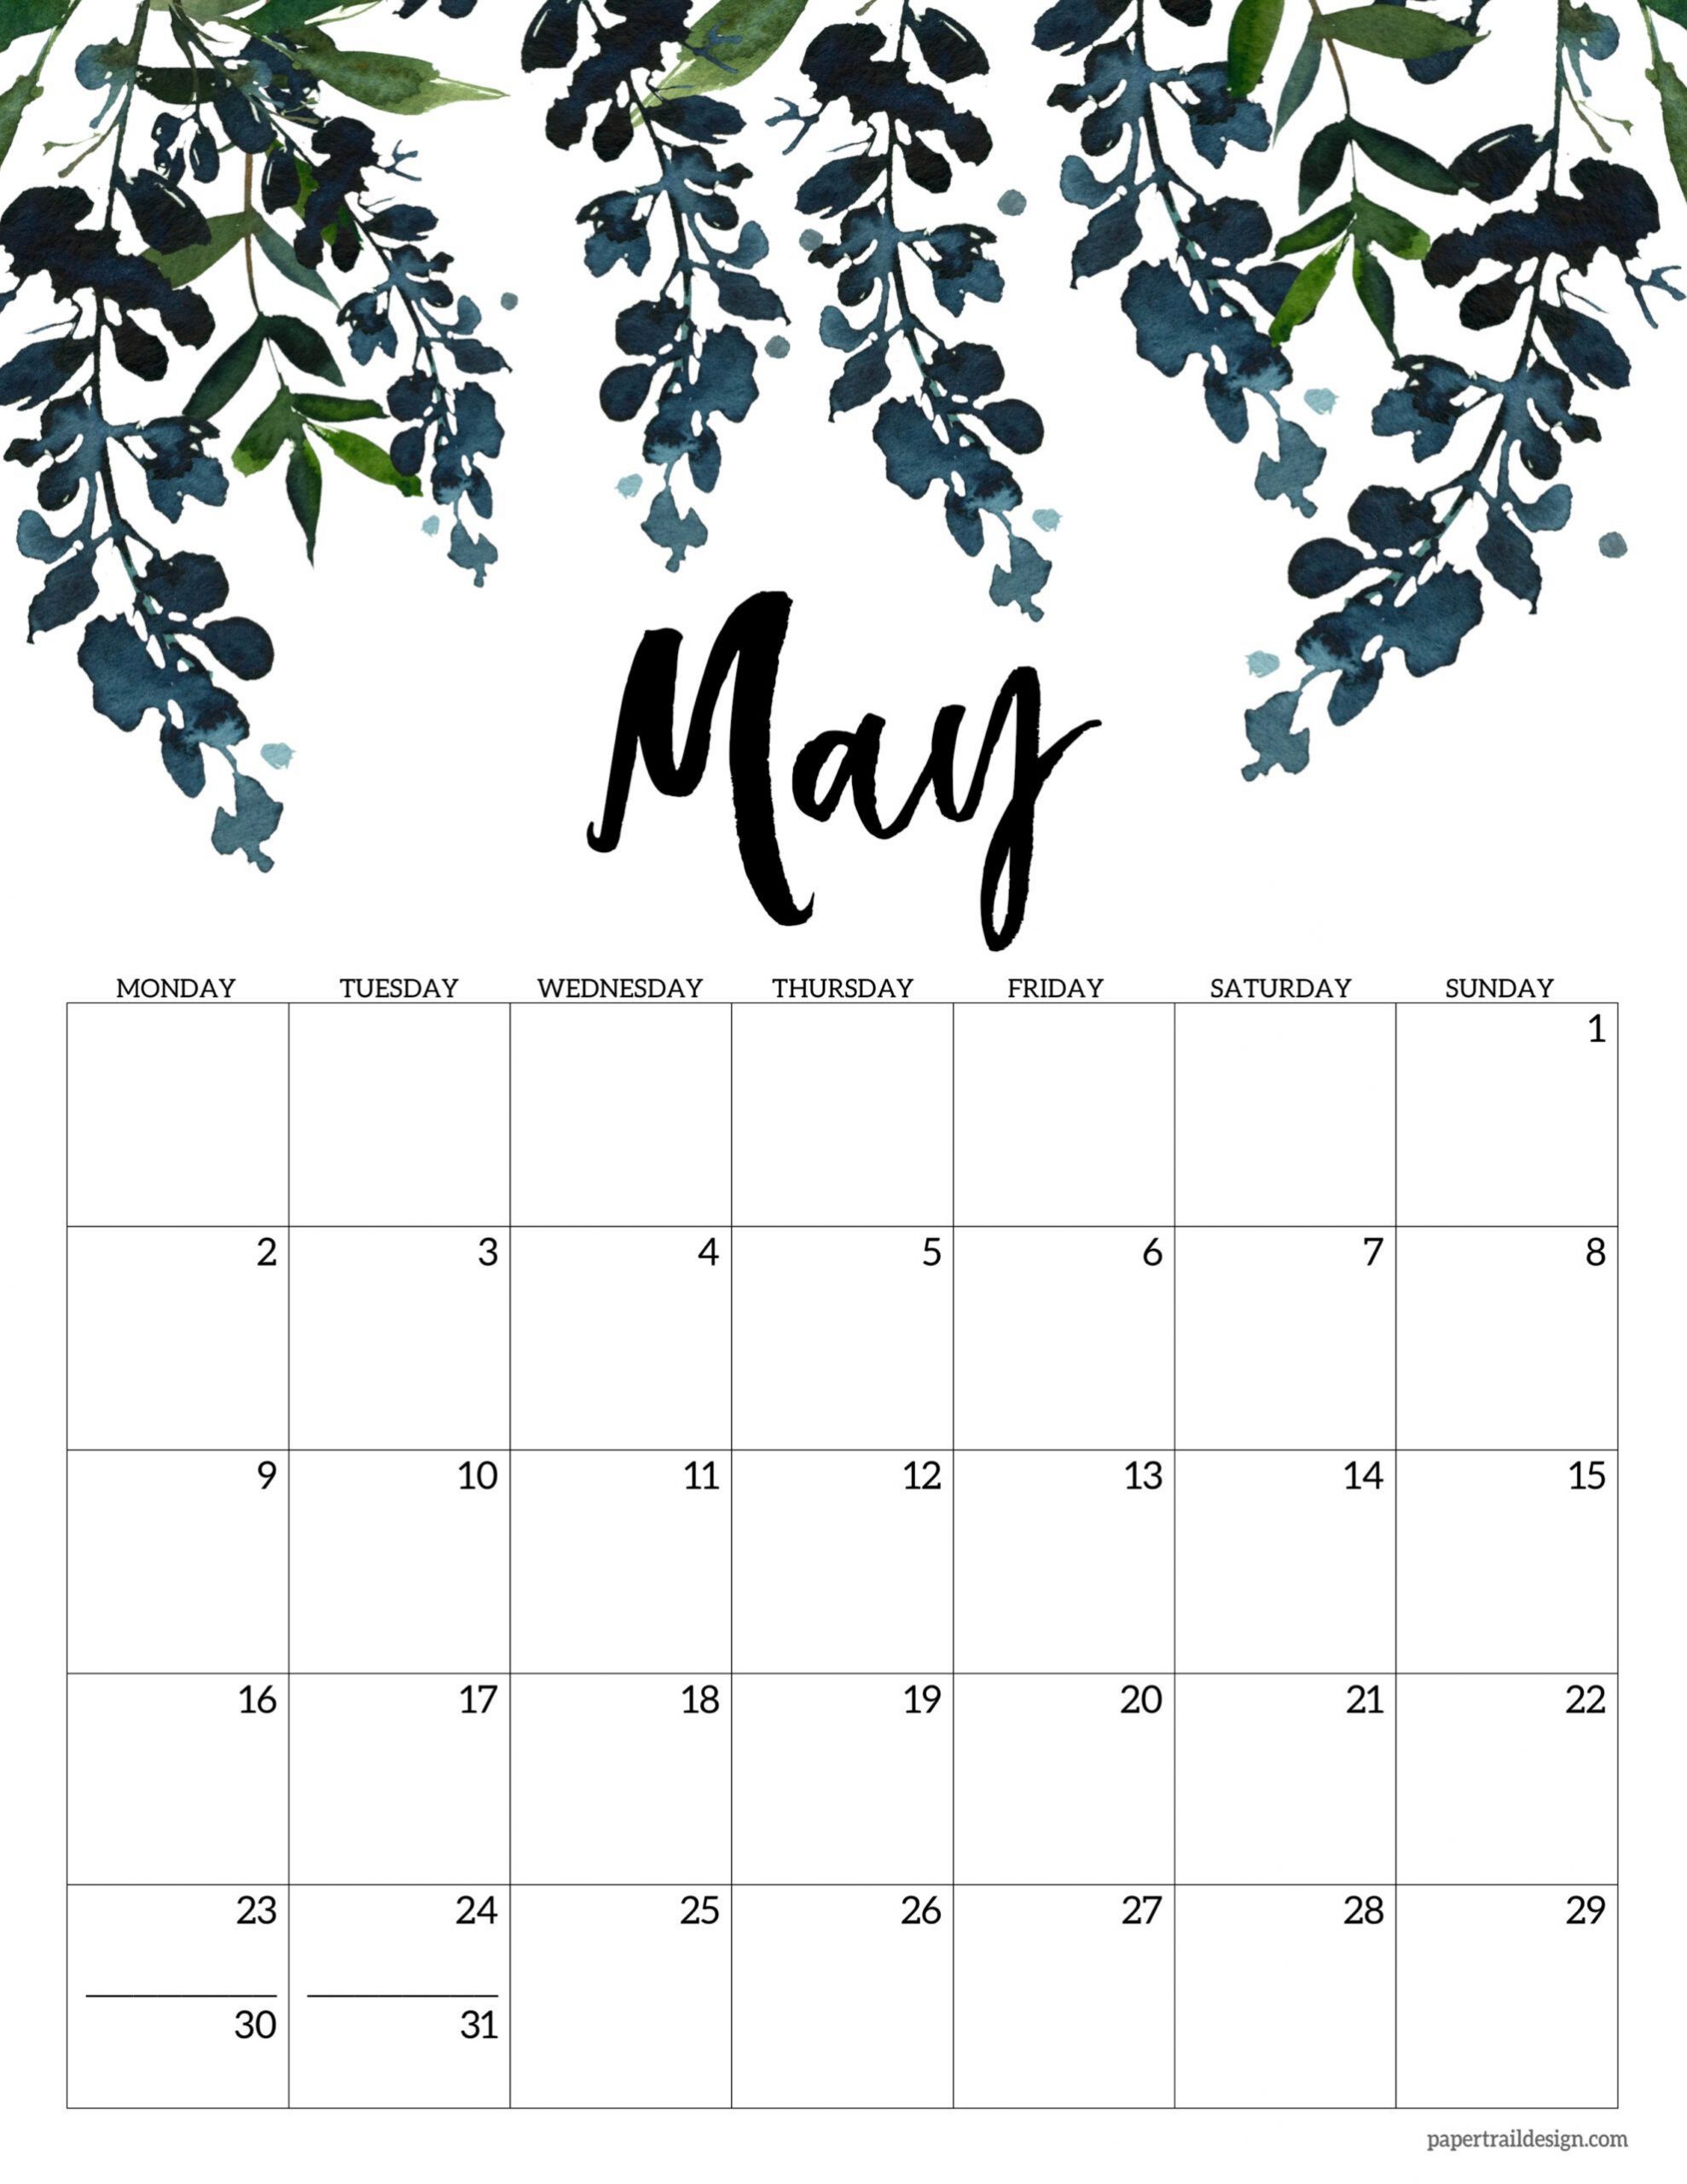 Free Printable 2022 Floral Calendar - Monday Start | Paper